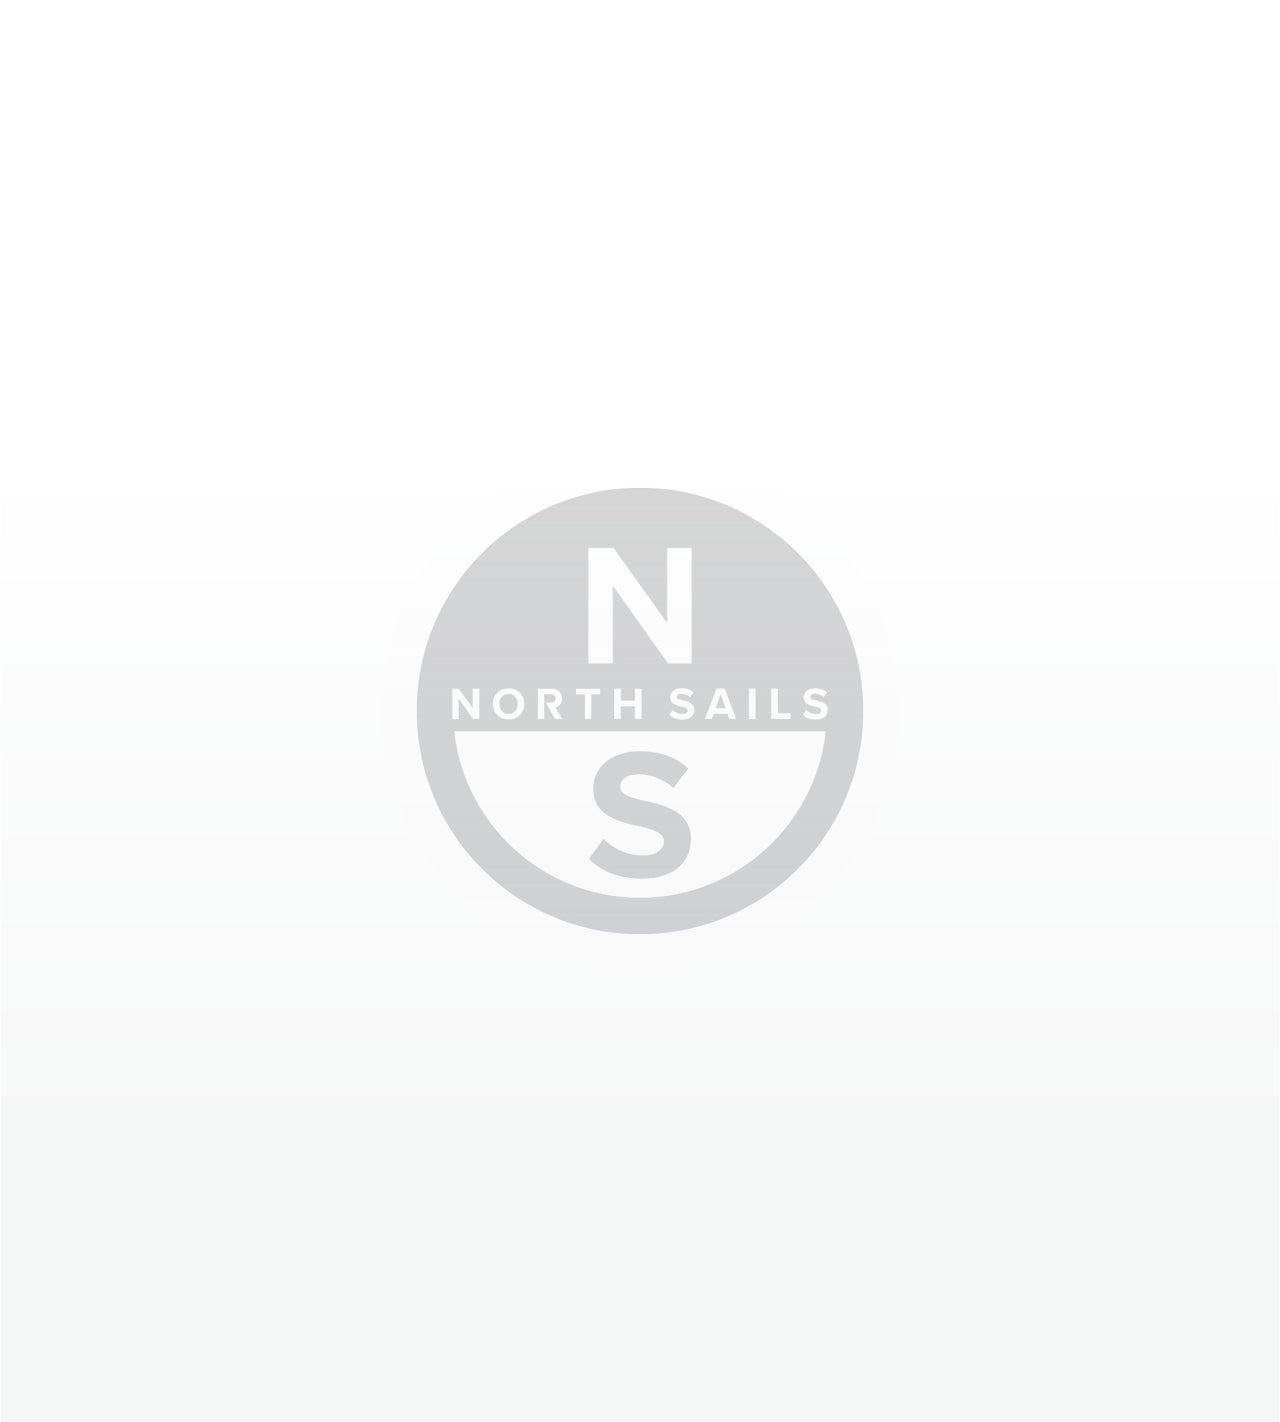 North Sails Dinghy 12 DU-14 Mainsail